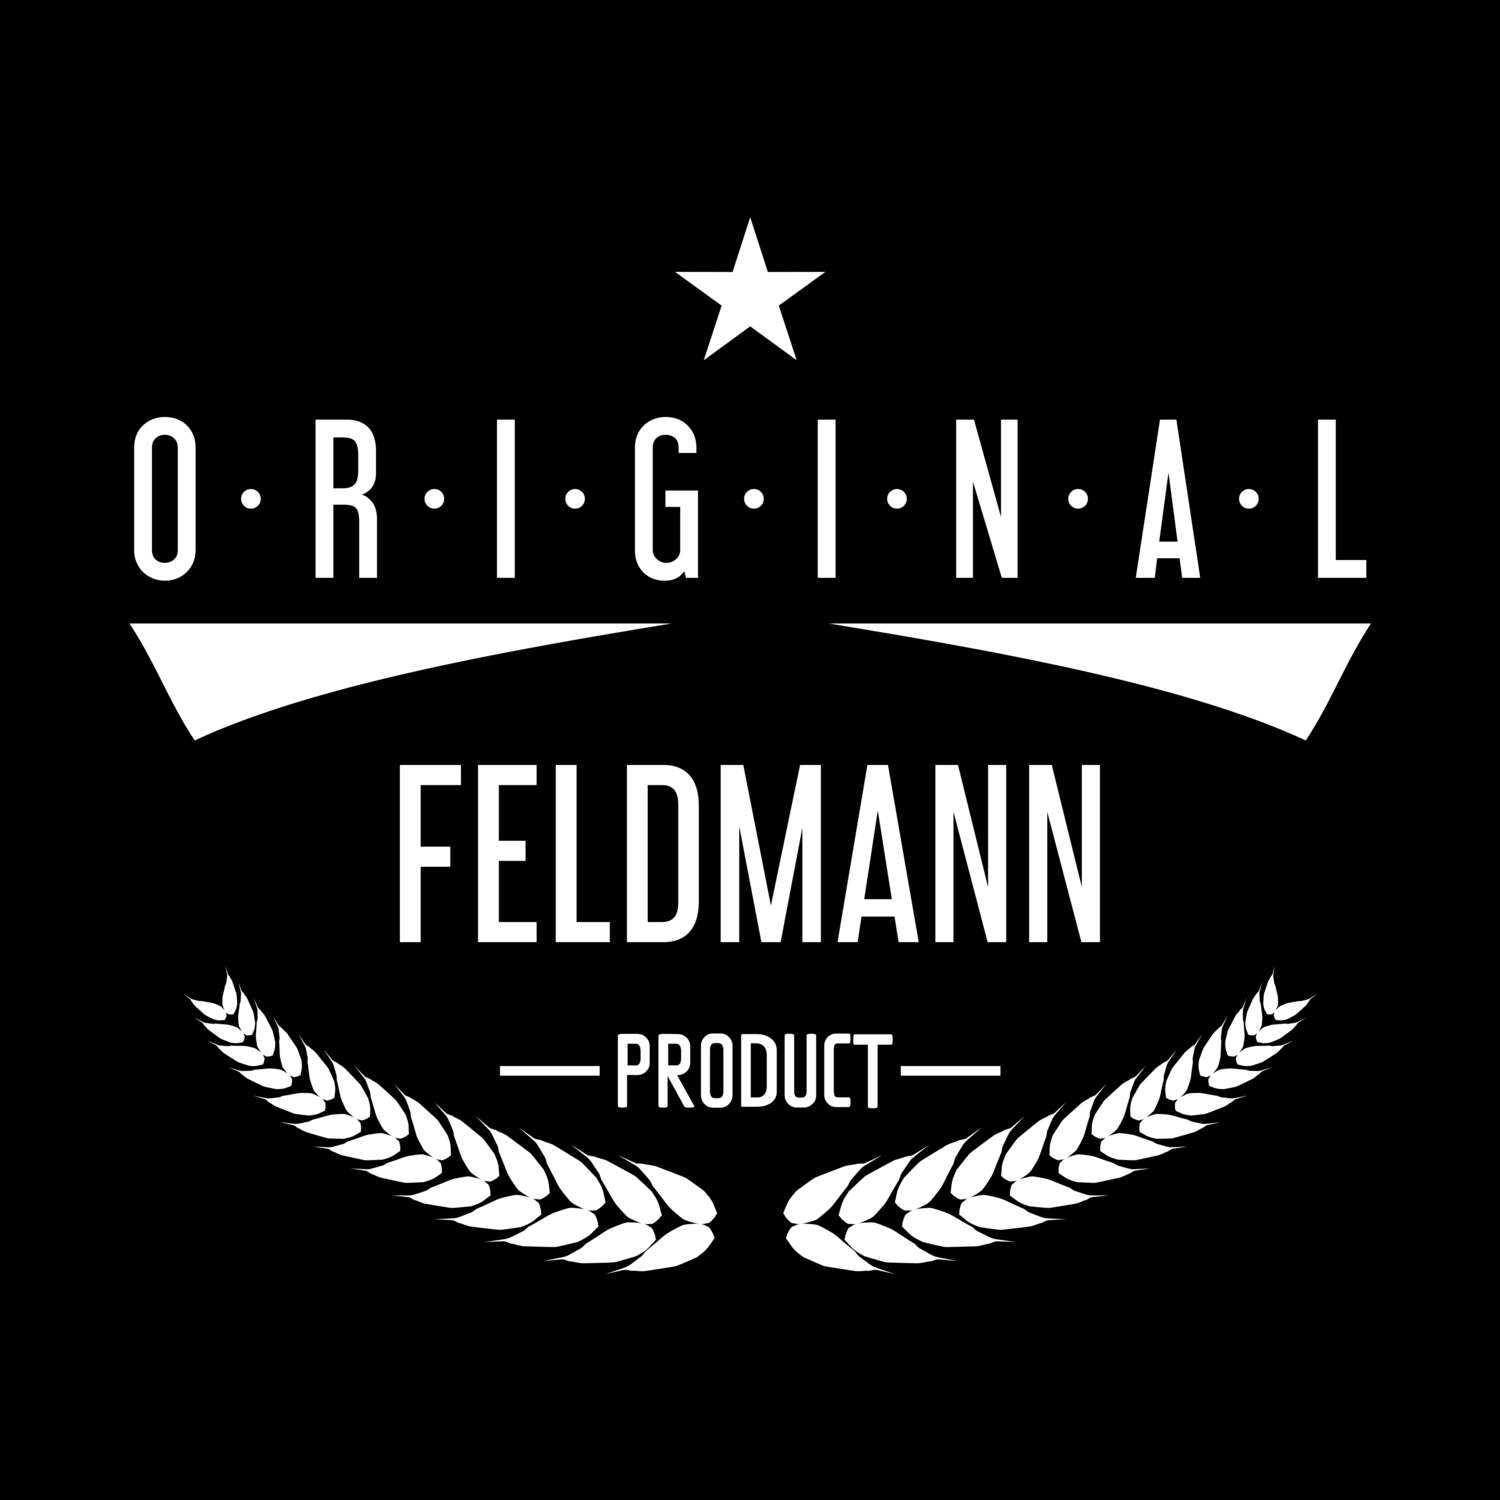 Feldmann T-Shirt »Original Product«